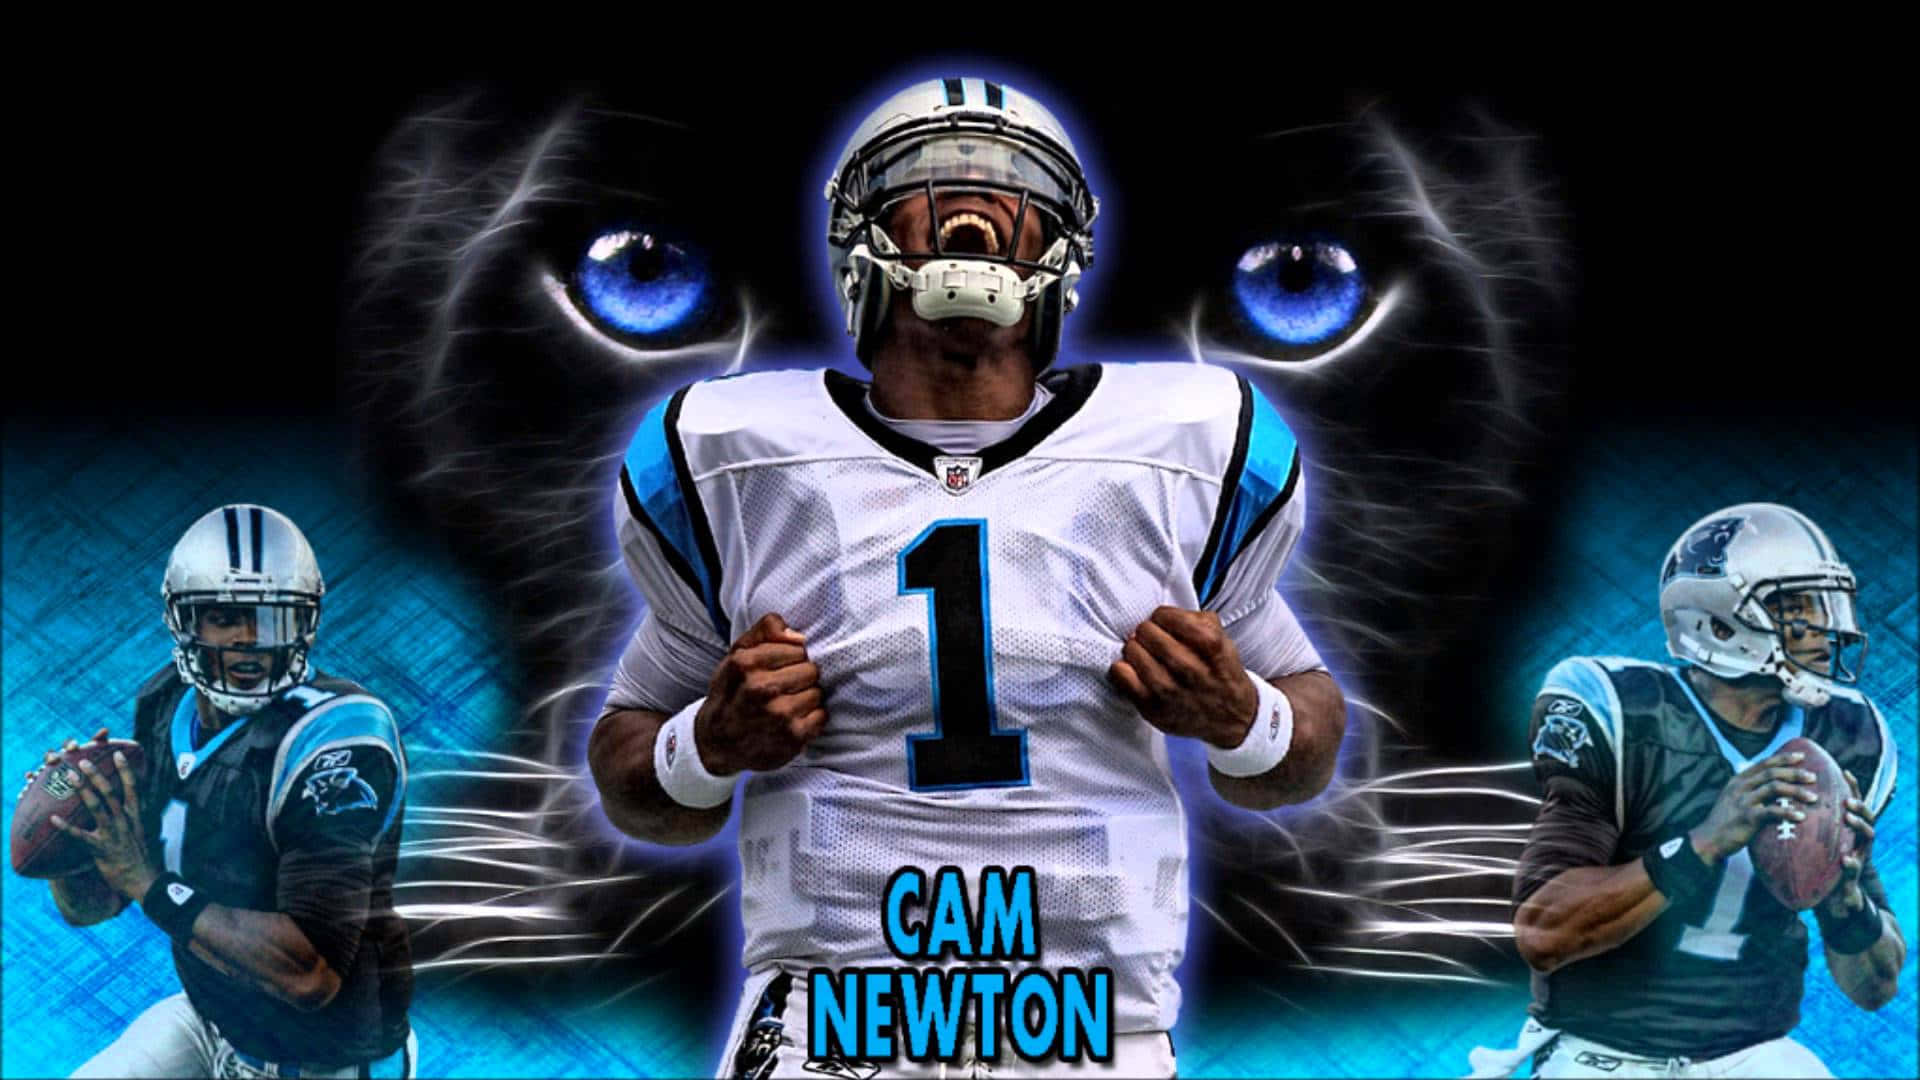 Cam Newton looking ahead to football season Wallpaper